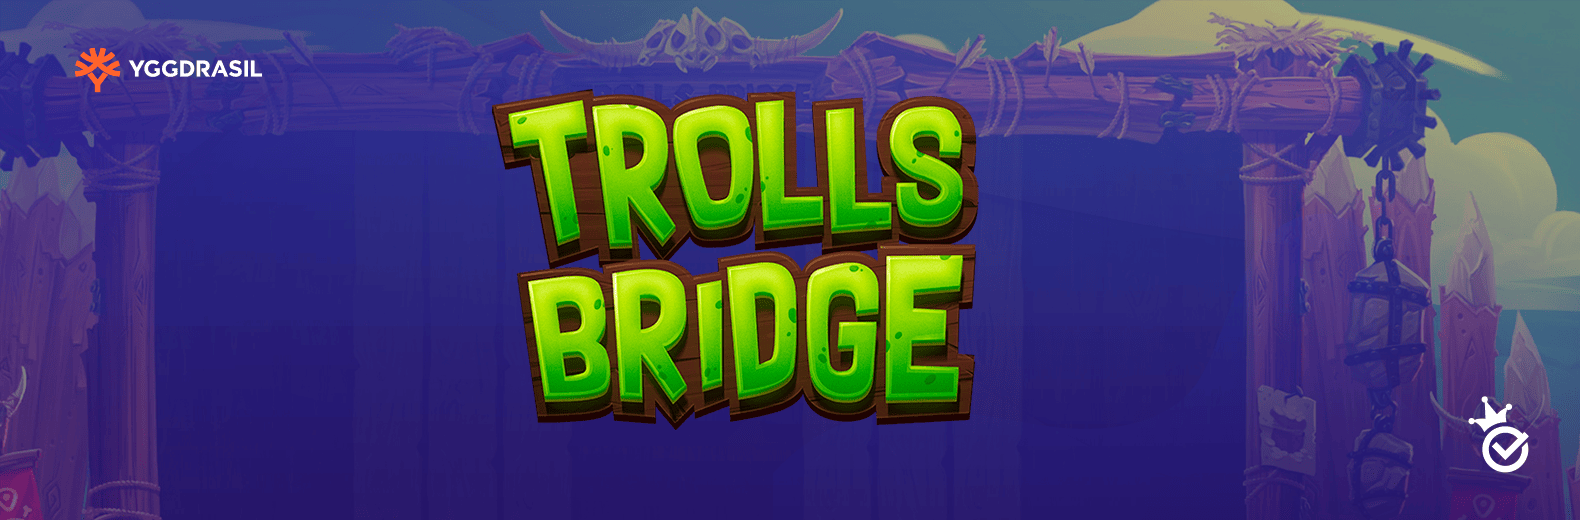 Trolls Bridge|Trolls Bridge